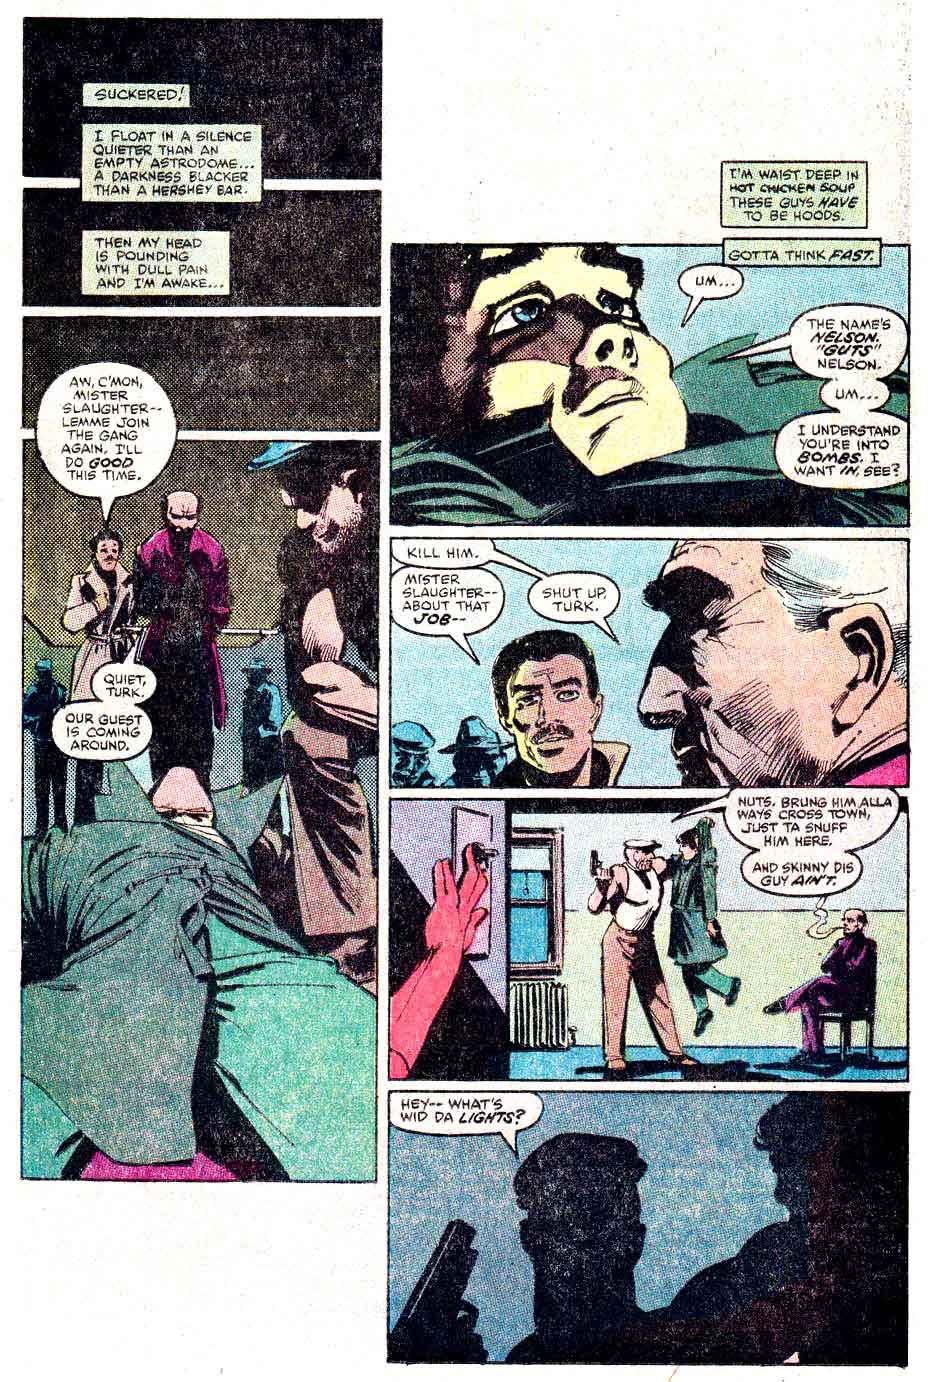 Daredevil #185 bronze age marvel comic book page art by Frank Miller